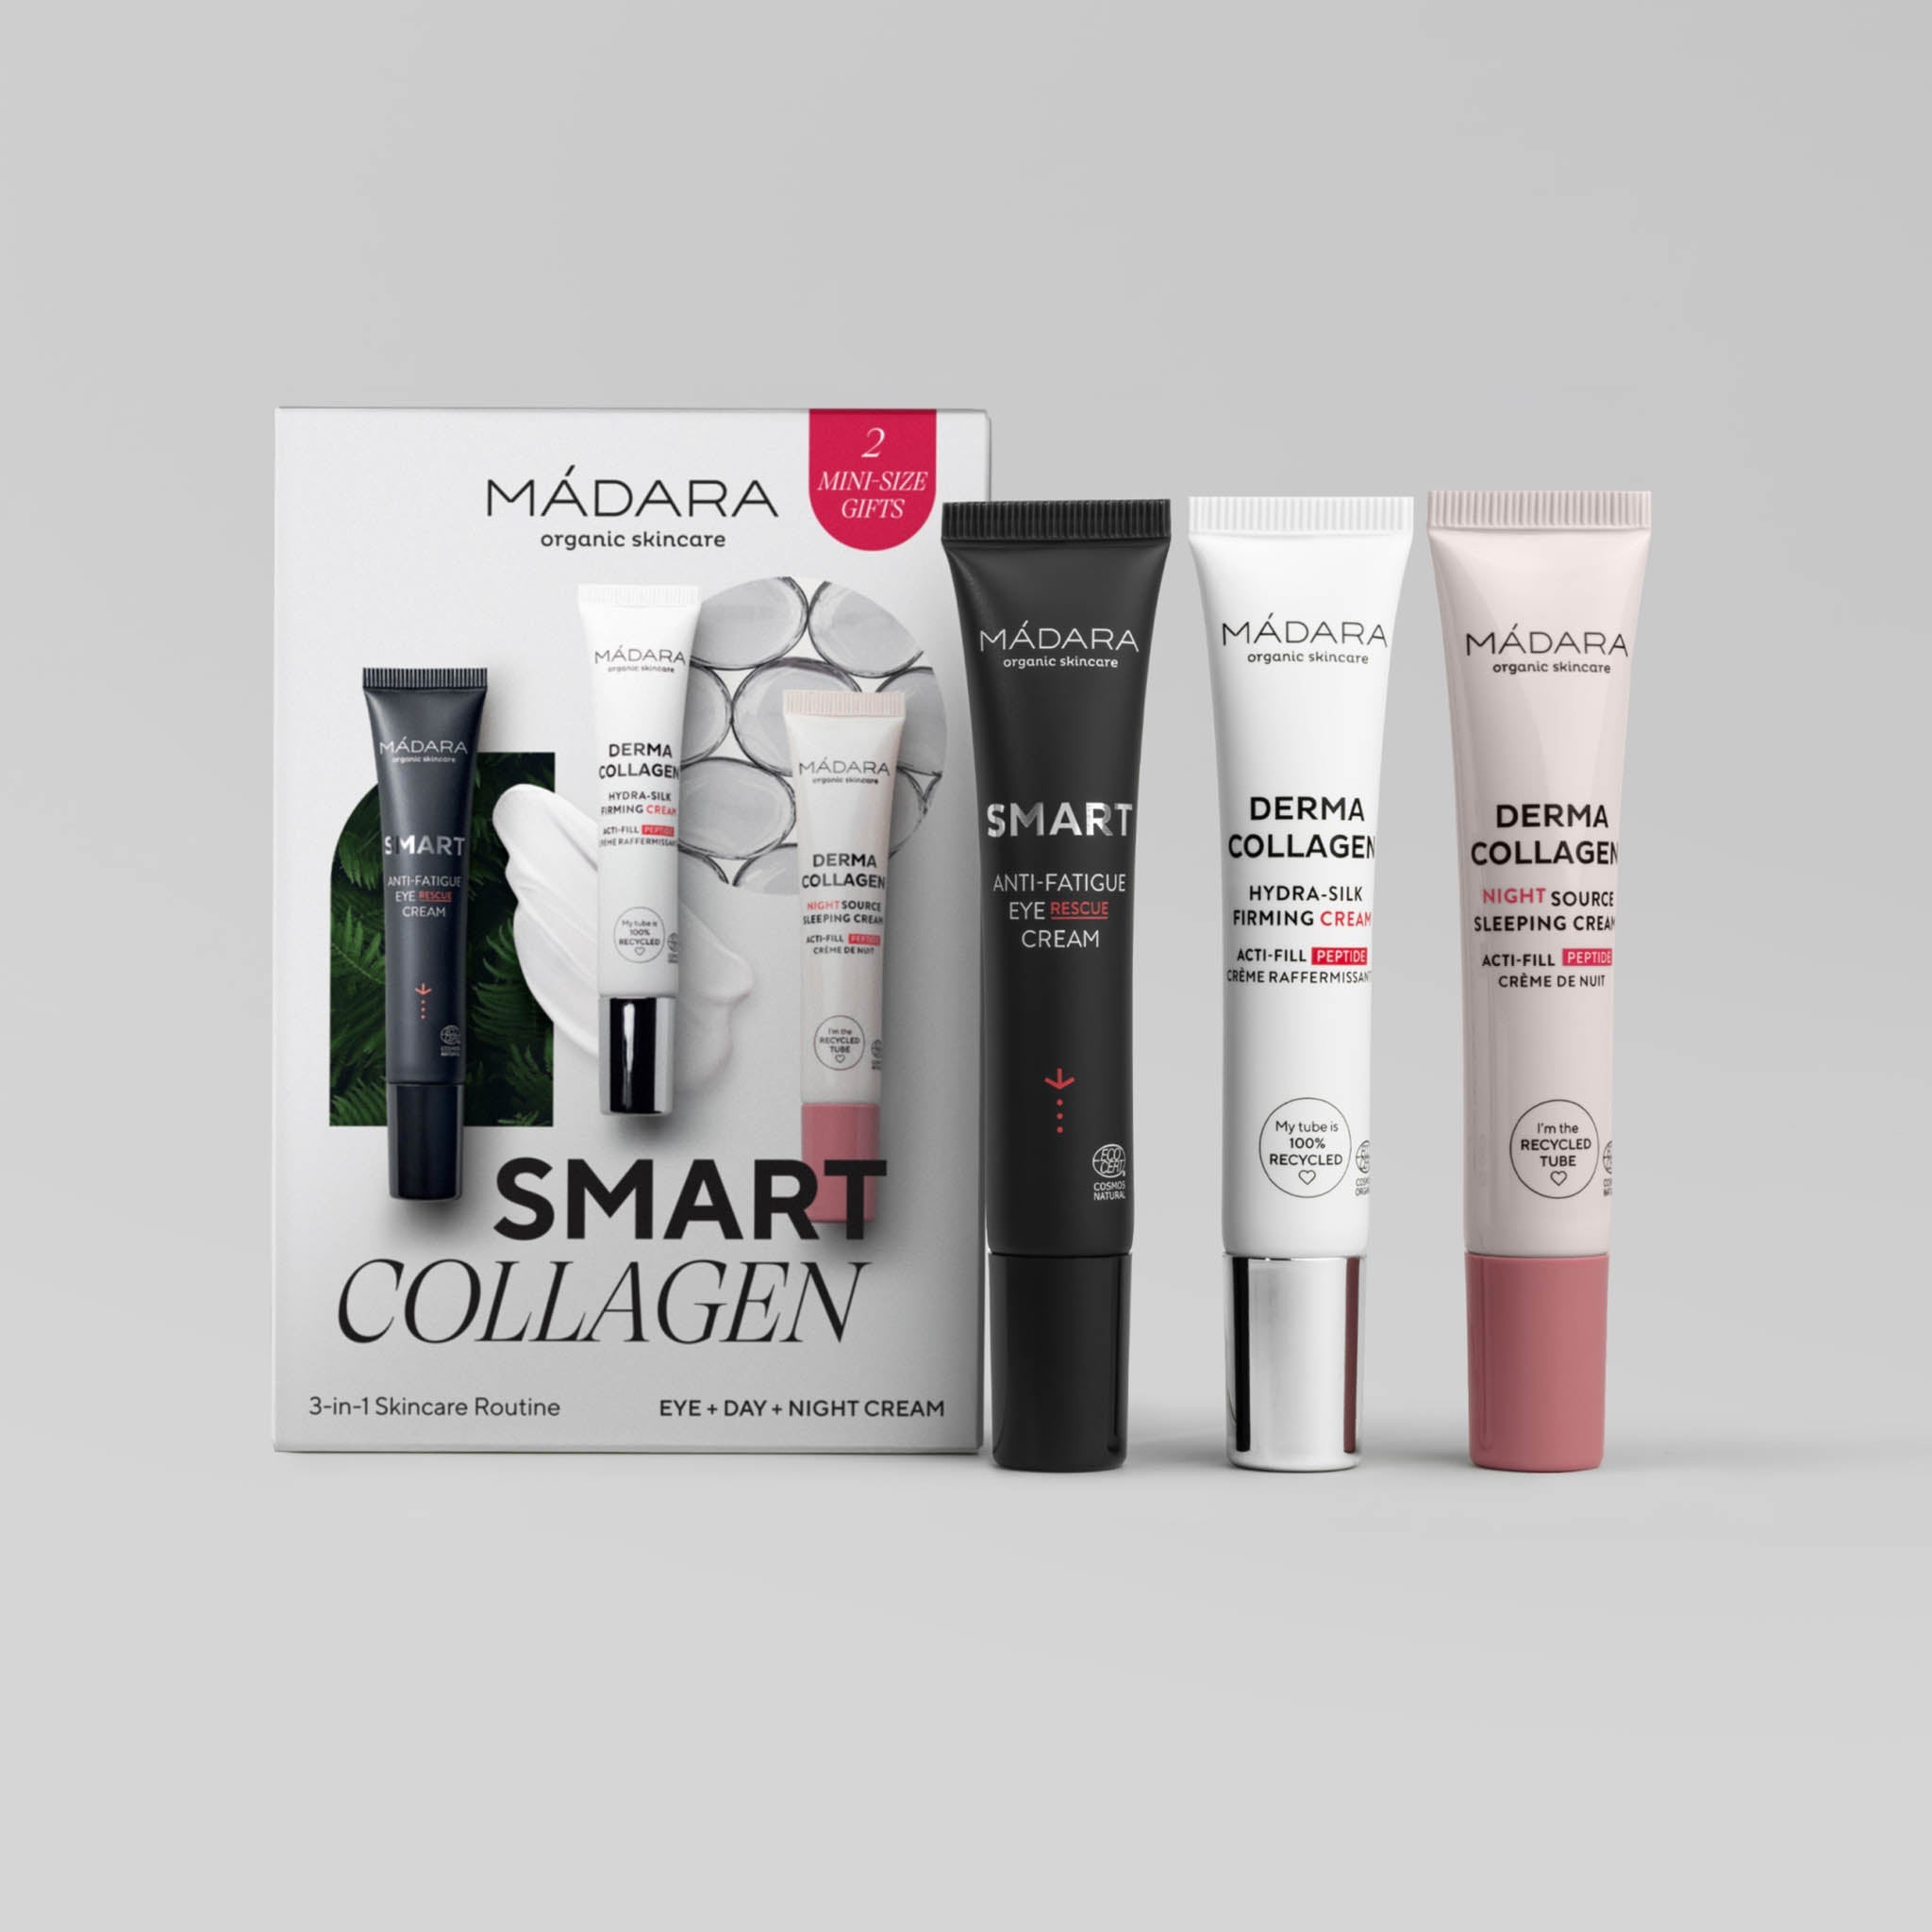 Smart Collagen 3-in-1 Skincare Set - Worth £52.85 - mypure.co.uk